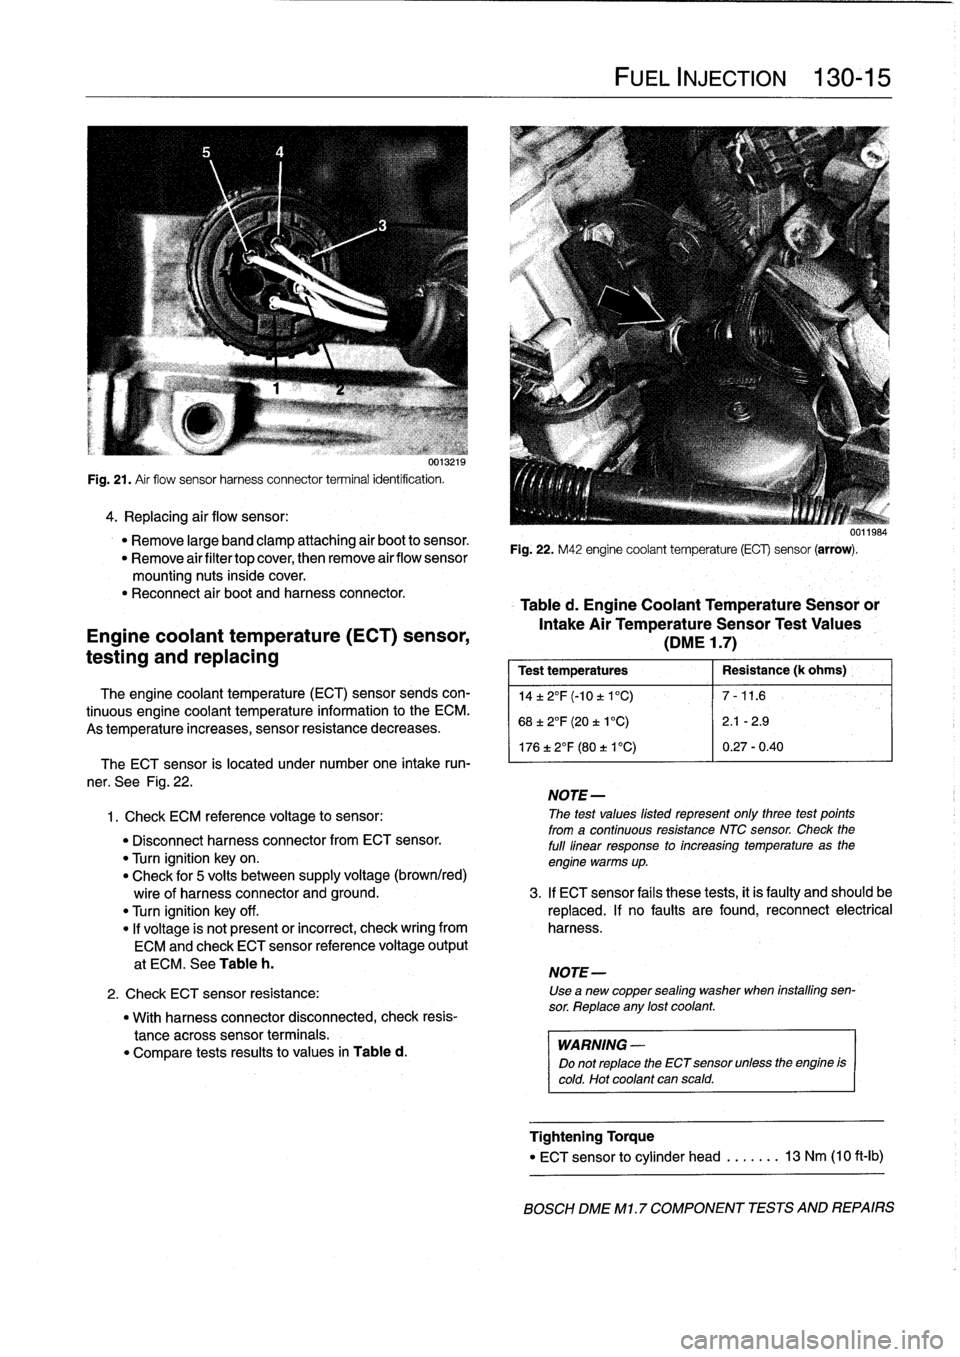 BMW 318i 1998 E36 Workshop Manual u0
I
.[
Ia

Fig
.
21
.
Air
flow
sensor
harness
connector
terminal
identification
.

4
.
Replacing
air
flow
sensor
:

"
Remove
large
band
clamp
attaching
air
boot
to
sensor
.

"
Remove
airfiltertop
cov